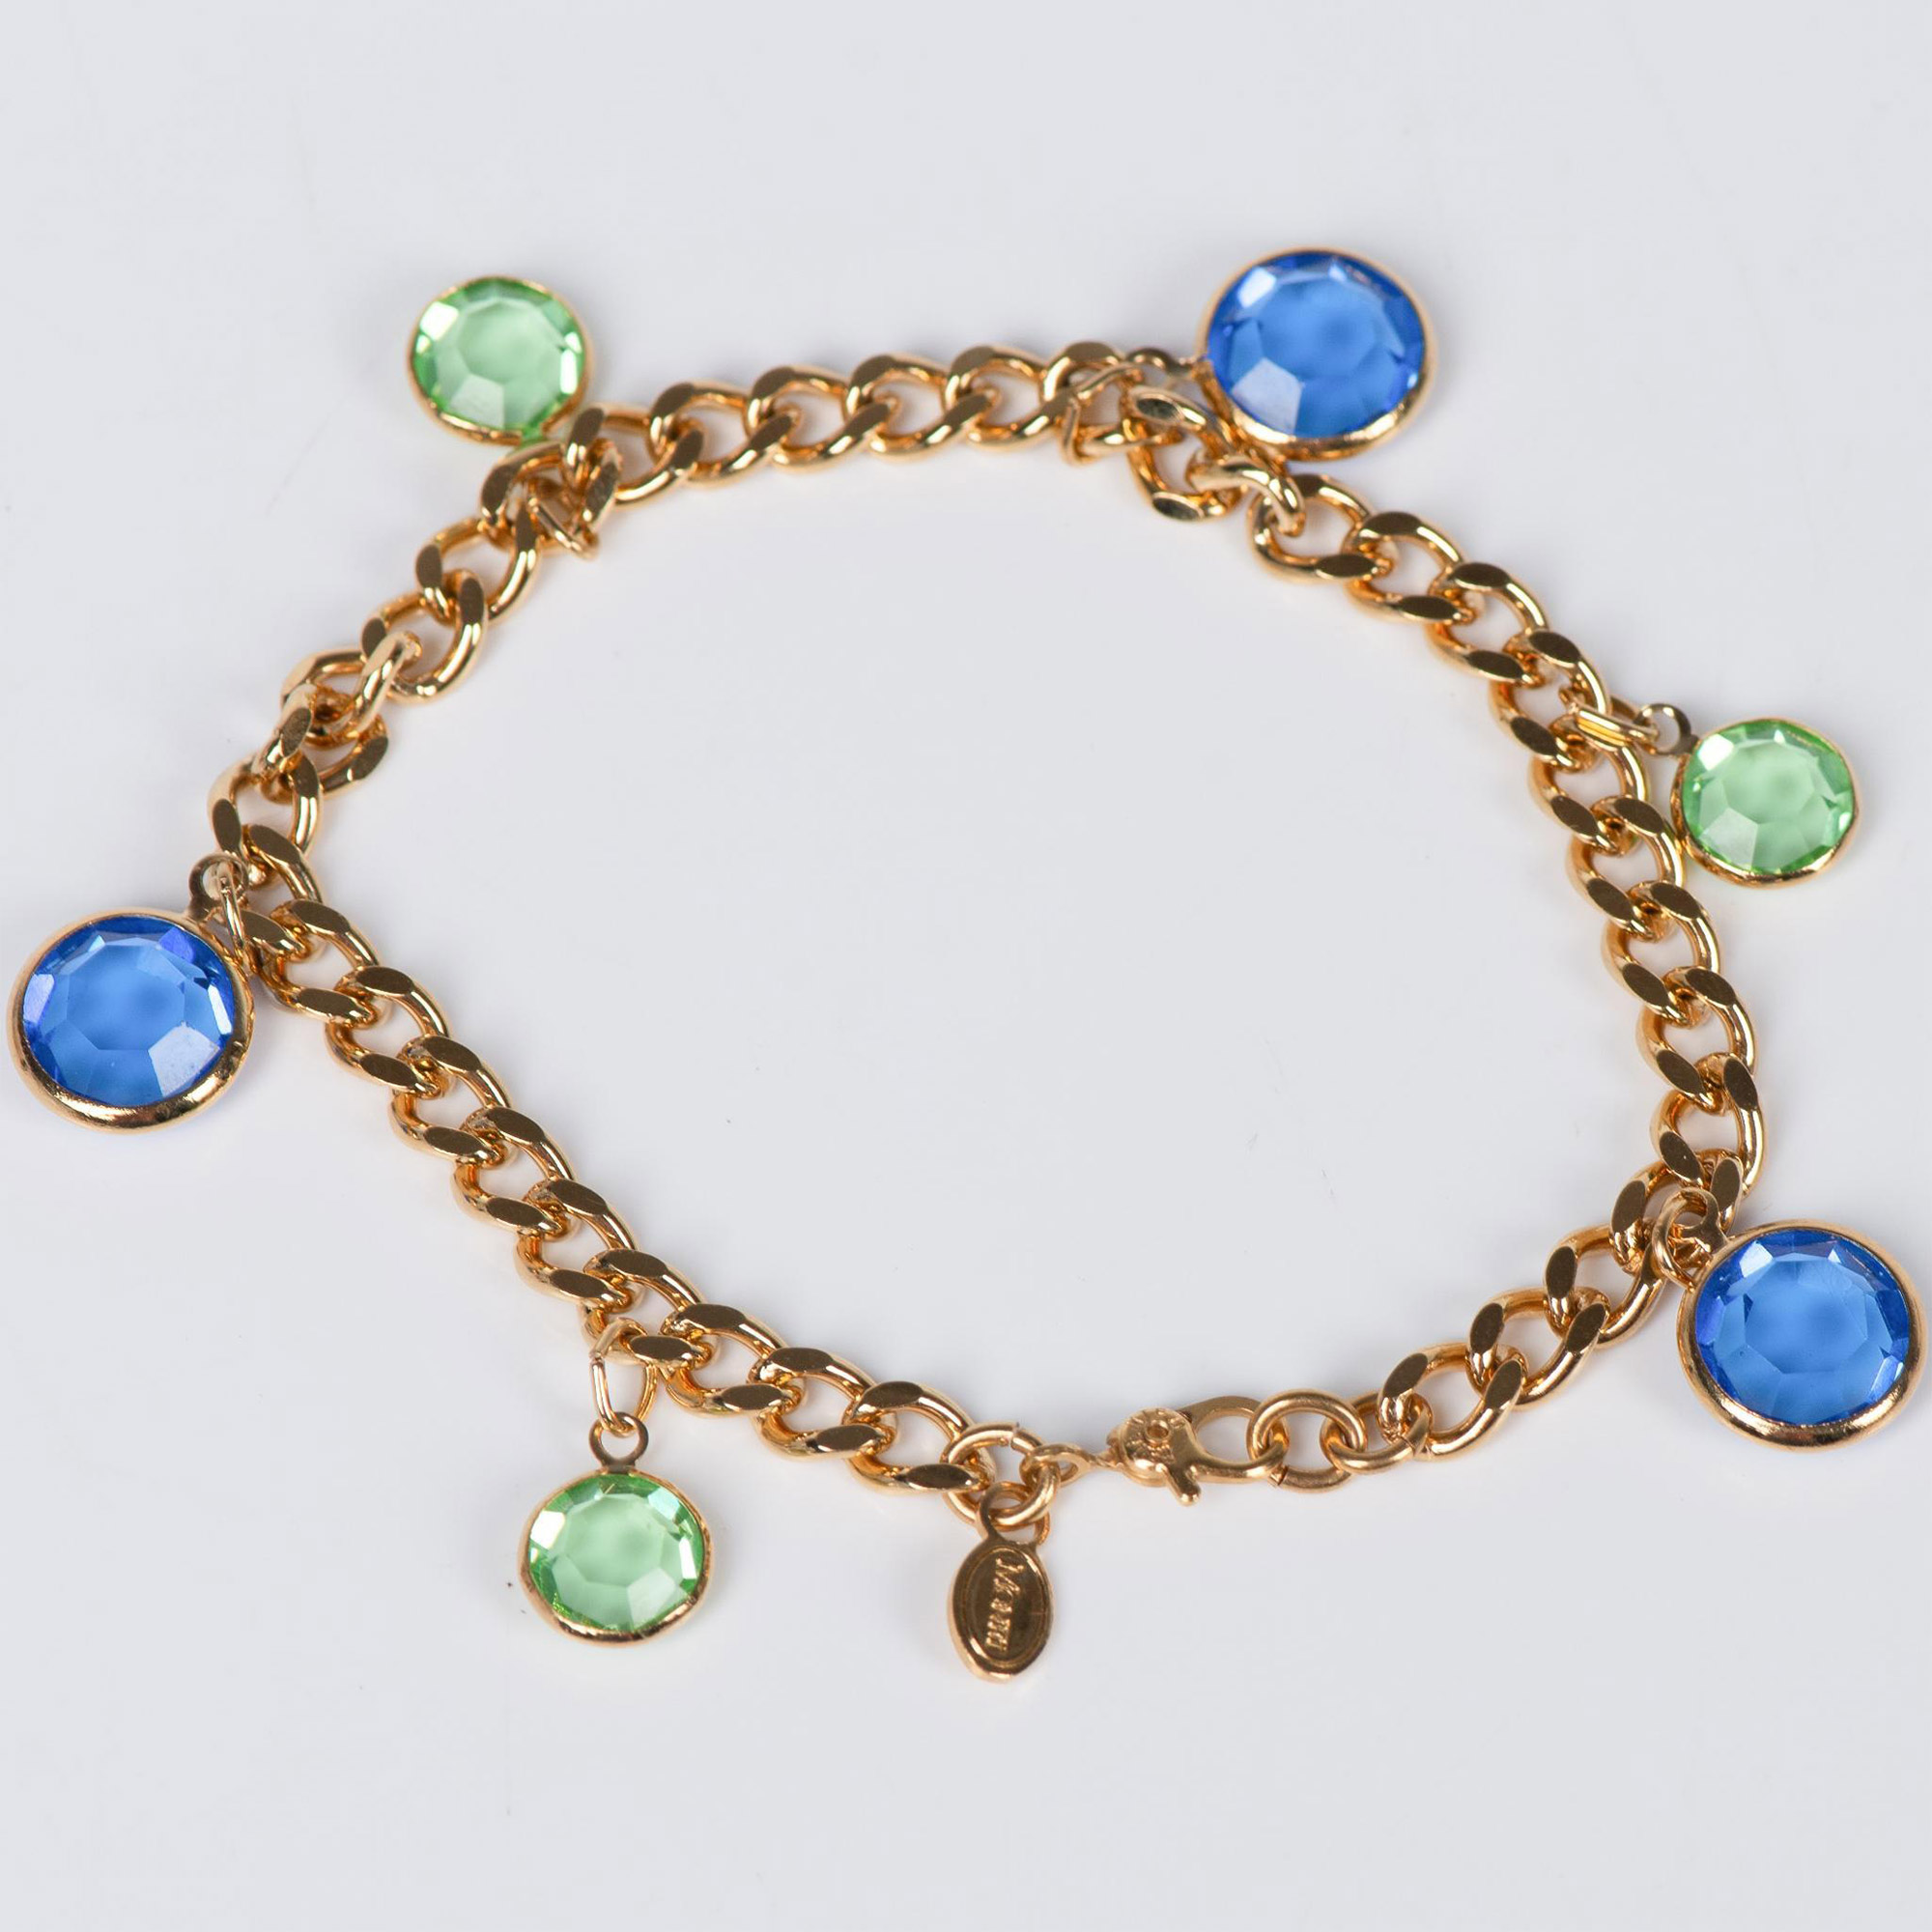 4pc Monet Rhinestone Brooch, Earrings and Bracelet - Image 5 of 5